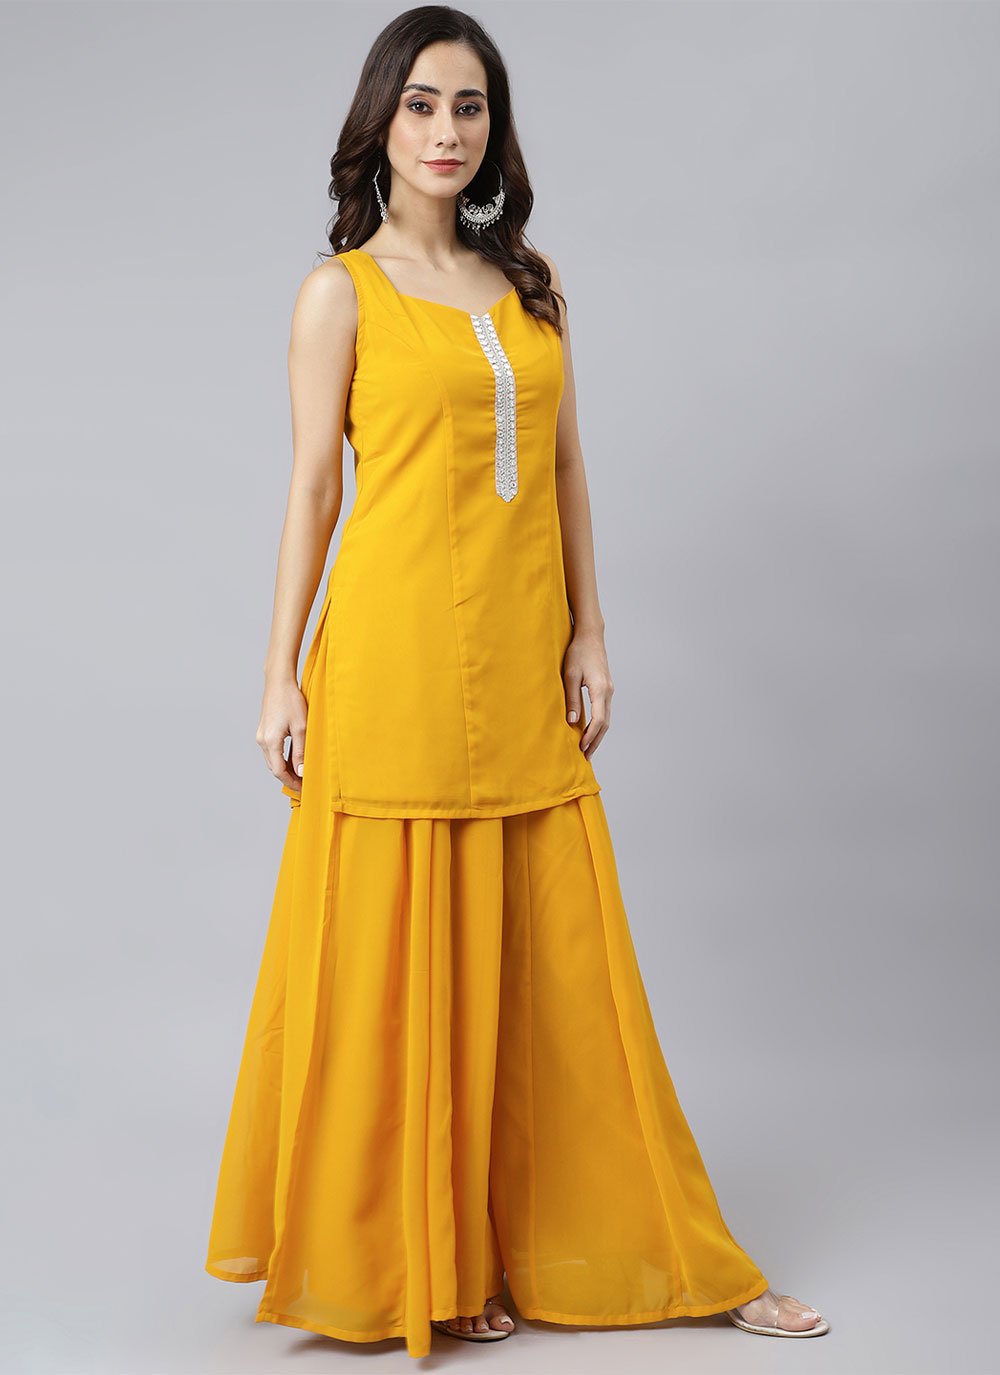 Georgette Readymade Salwar Suit in Mustard